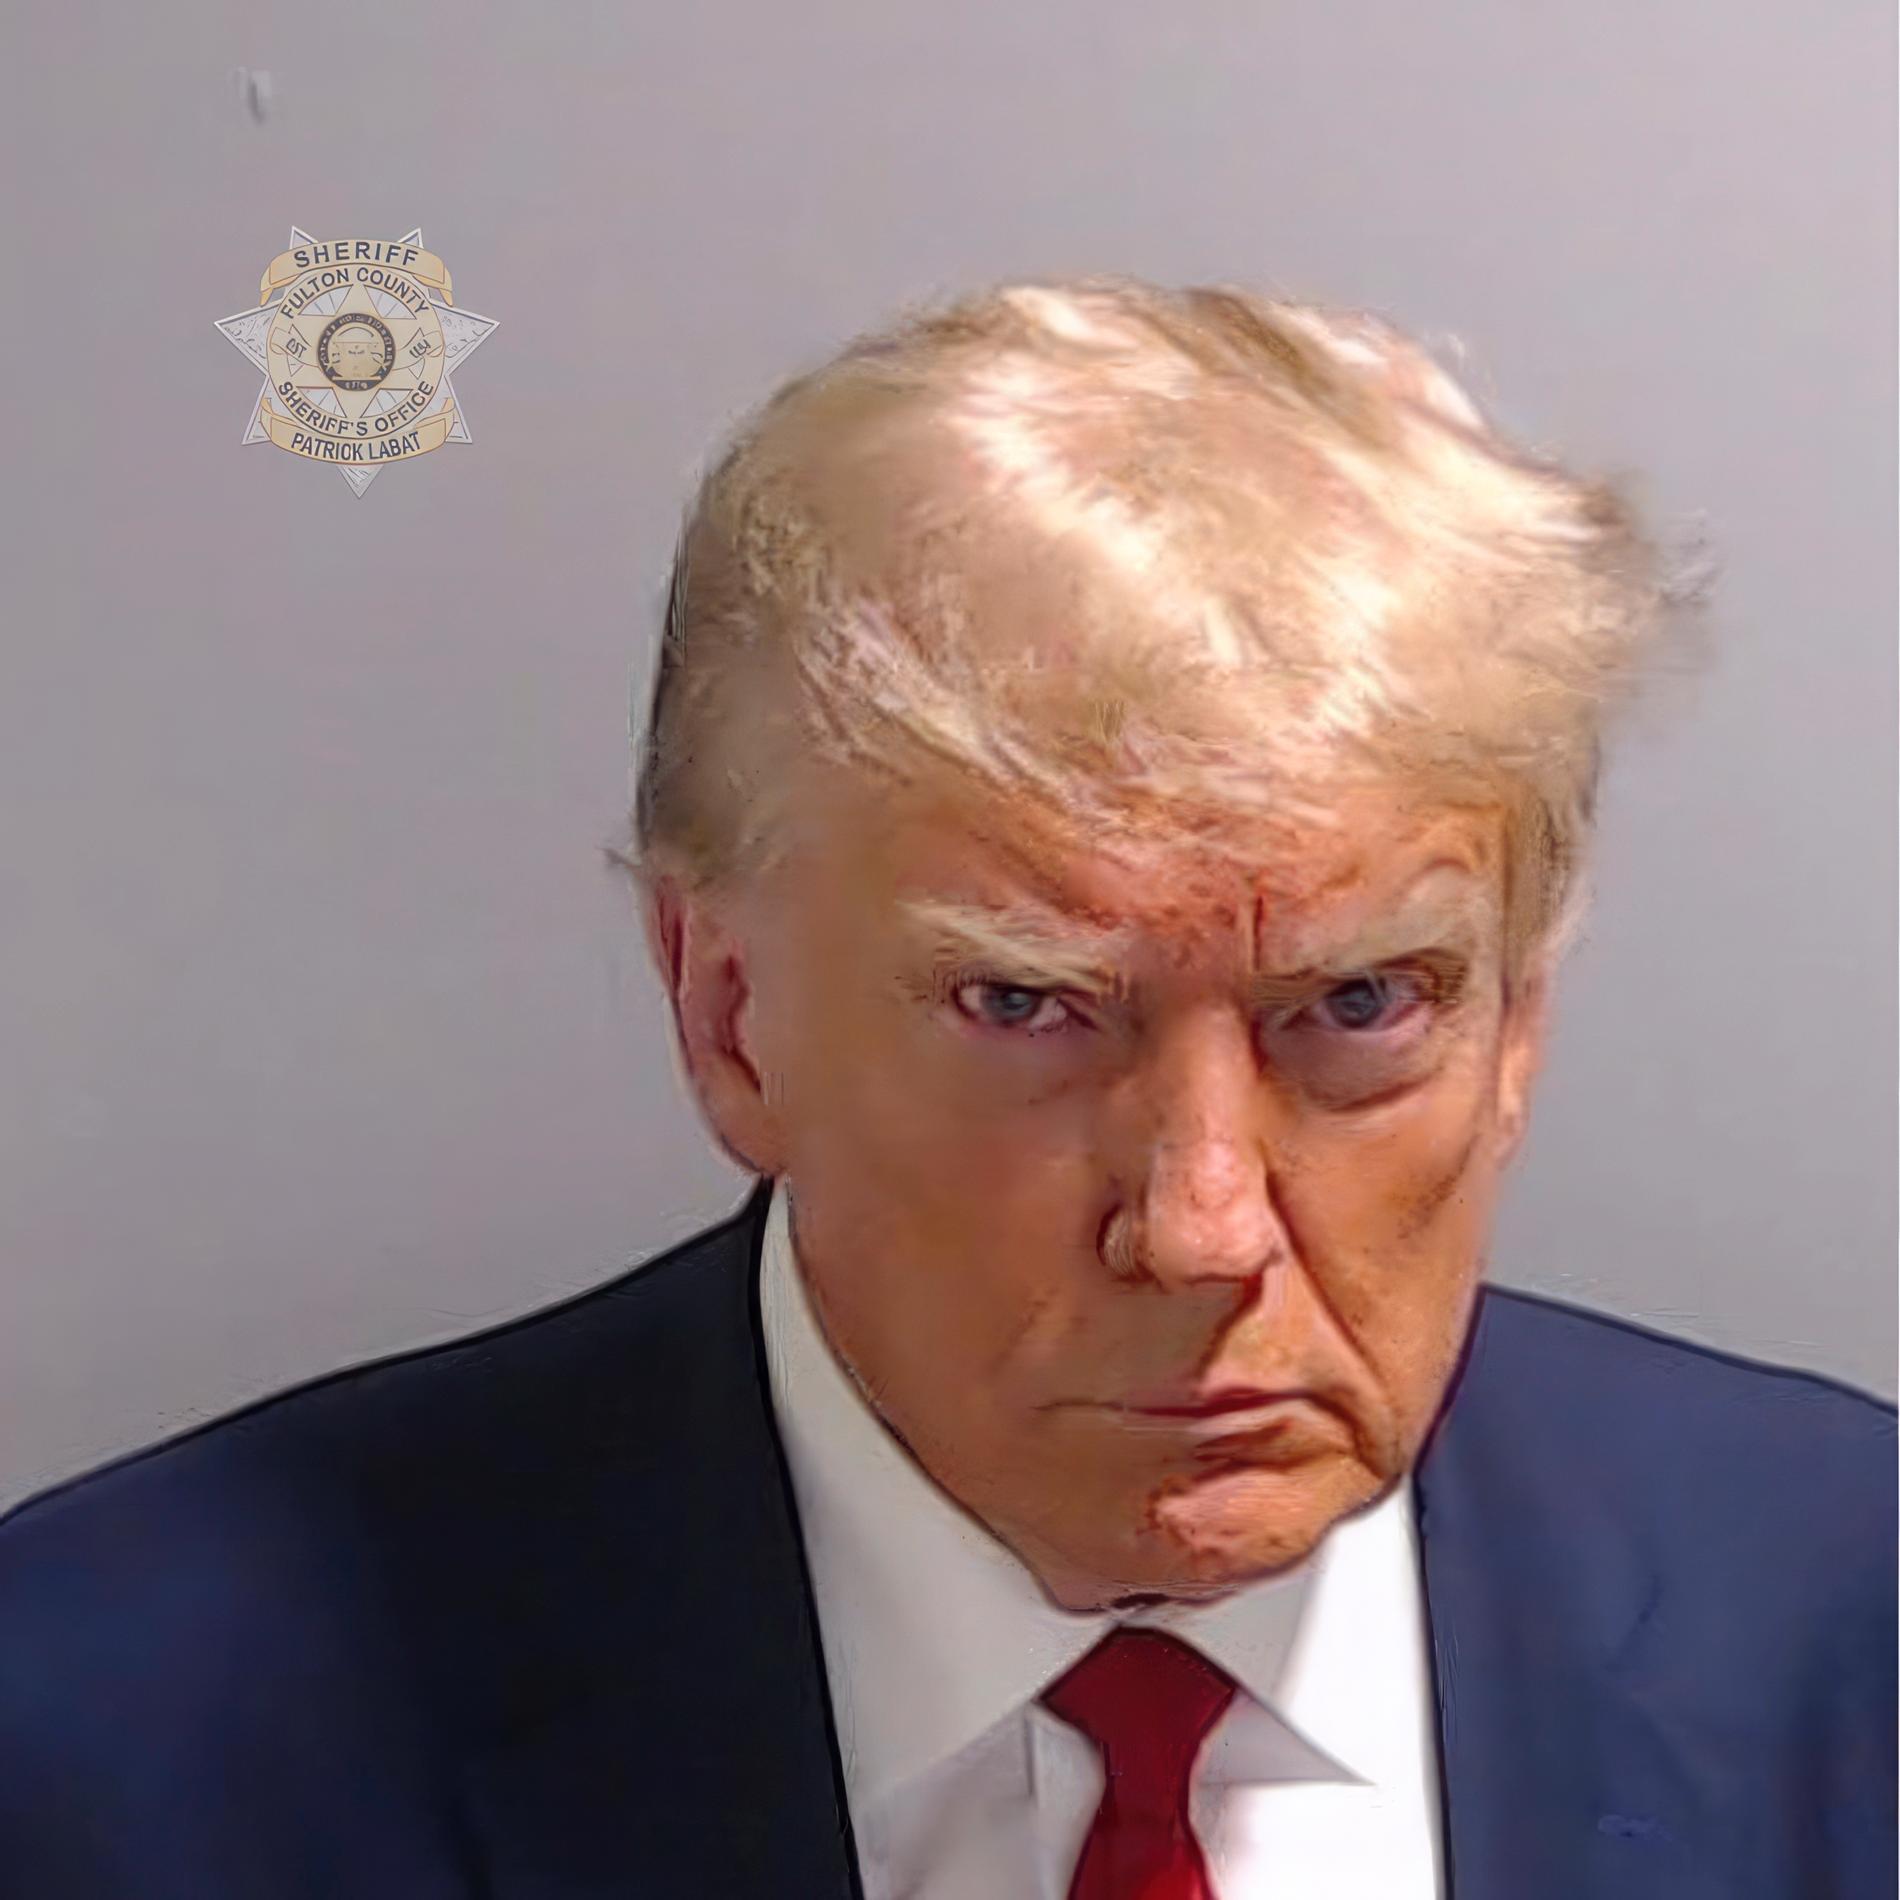 Polisens bild på Donald Trump